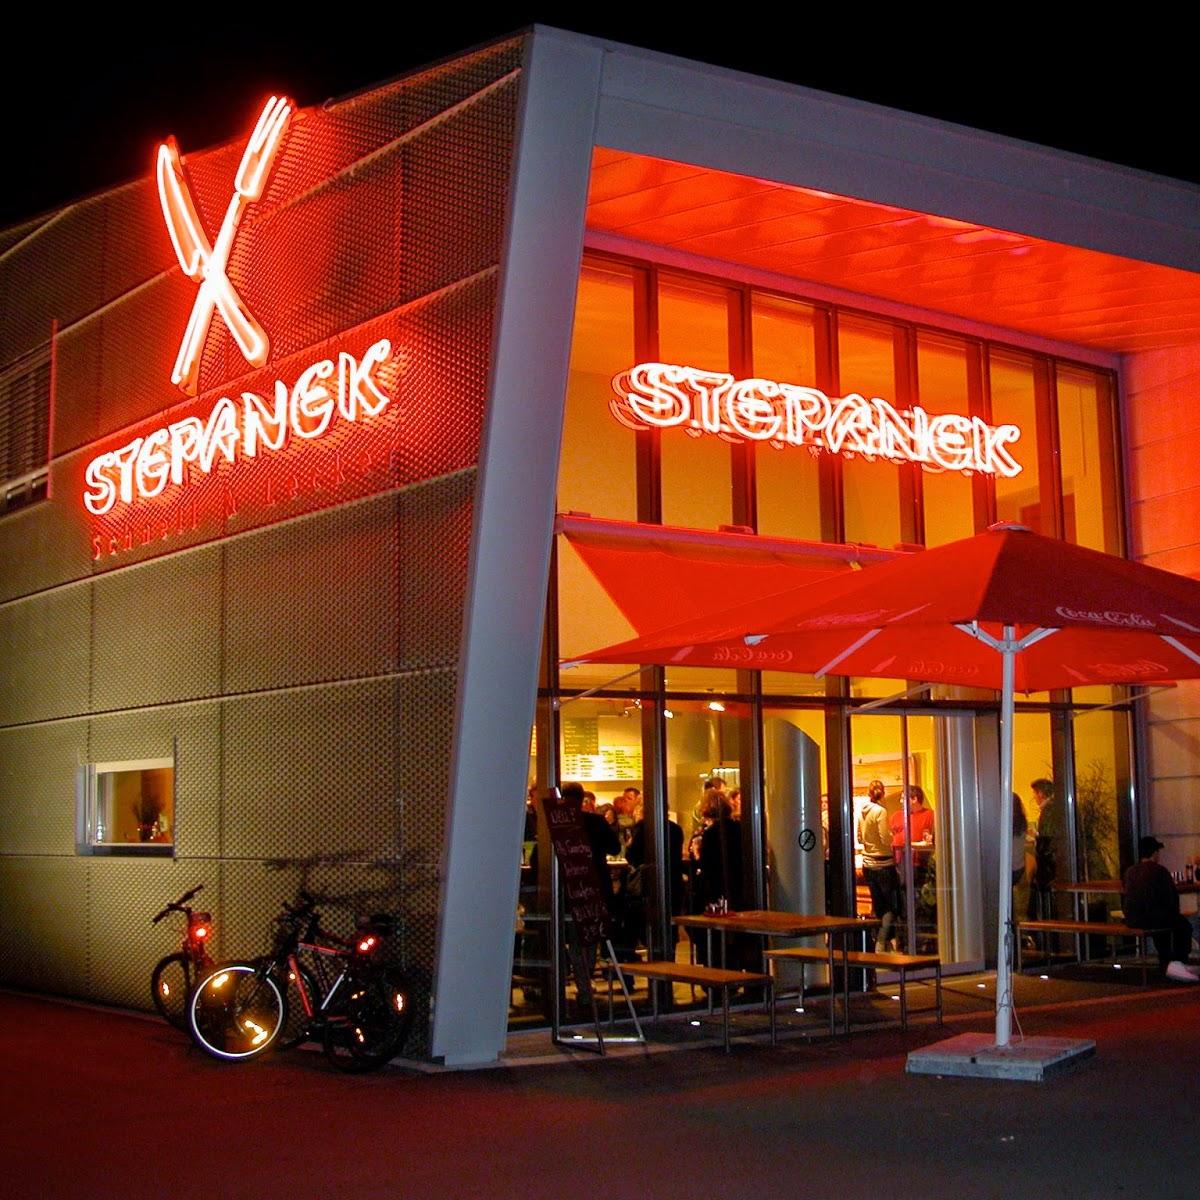 Restaurant "Stepanek" in Laufenburg